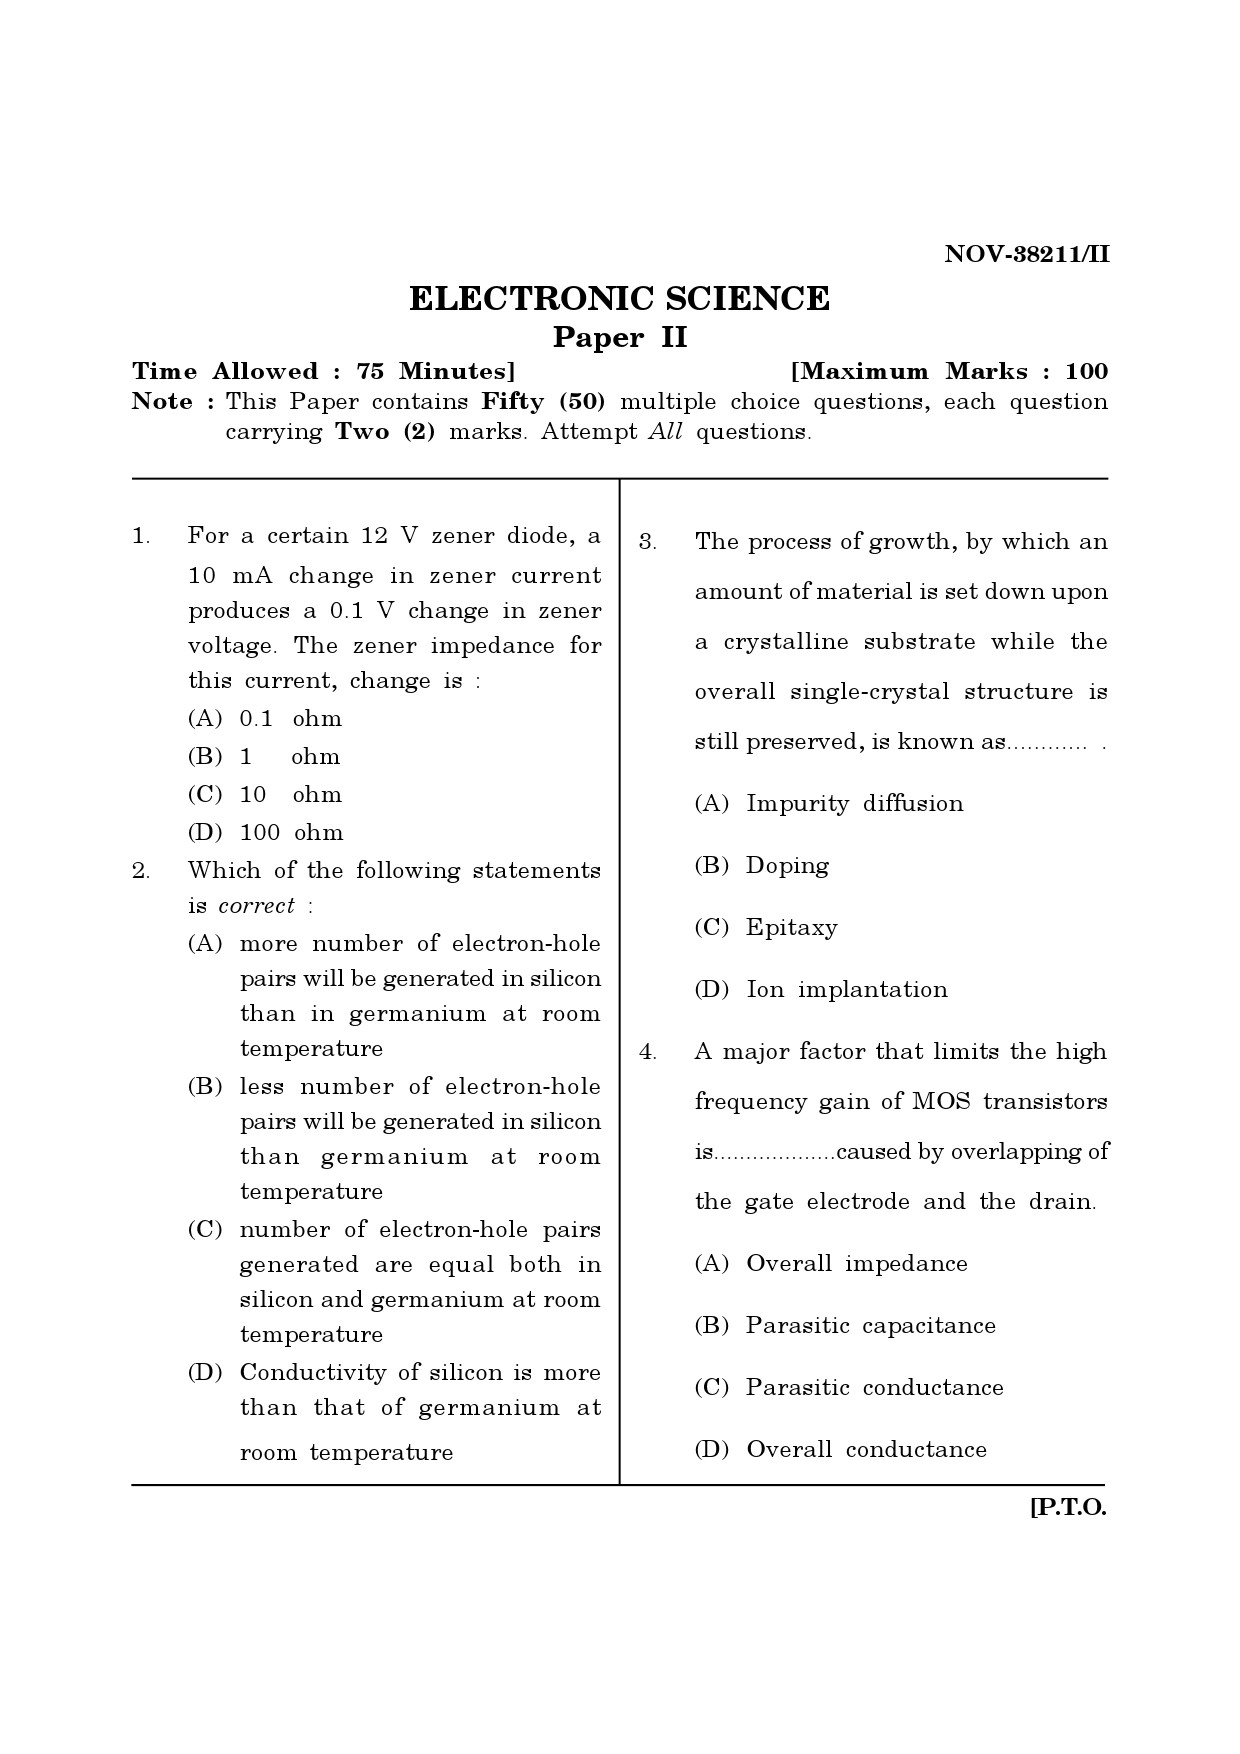 Maharashtra SET Electronics Science Question Paper II November 2011 1